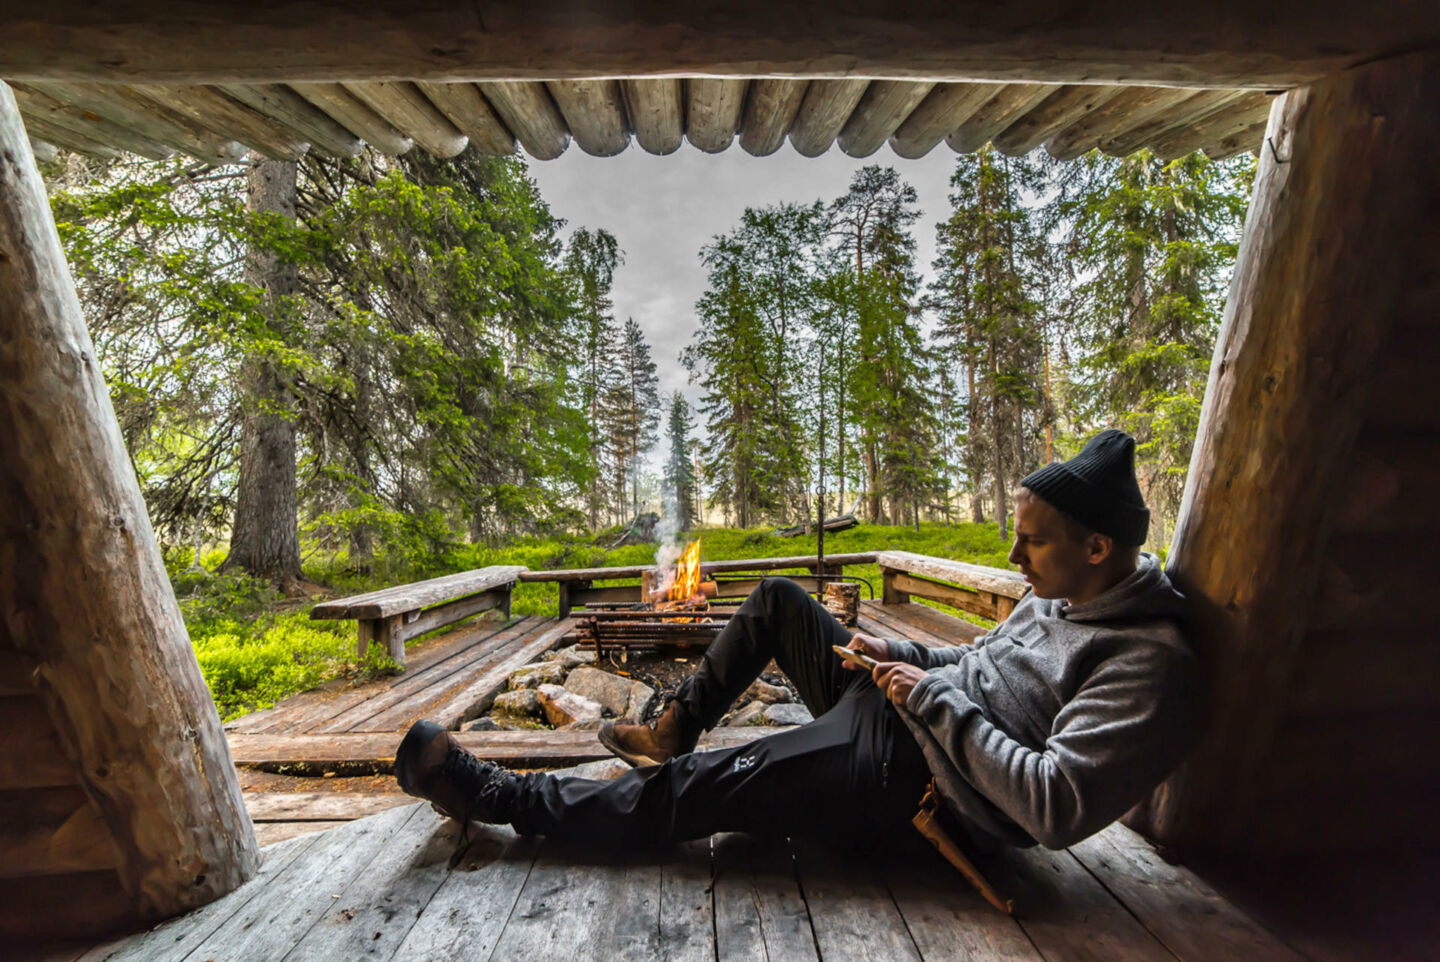 Enjoying a campfire at a laavu in Ranua, Finland